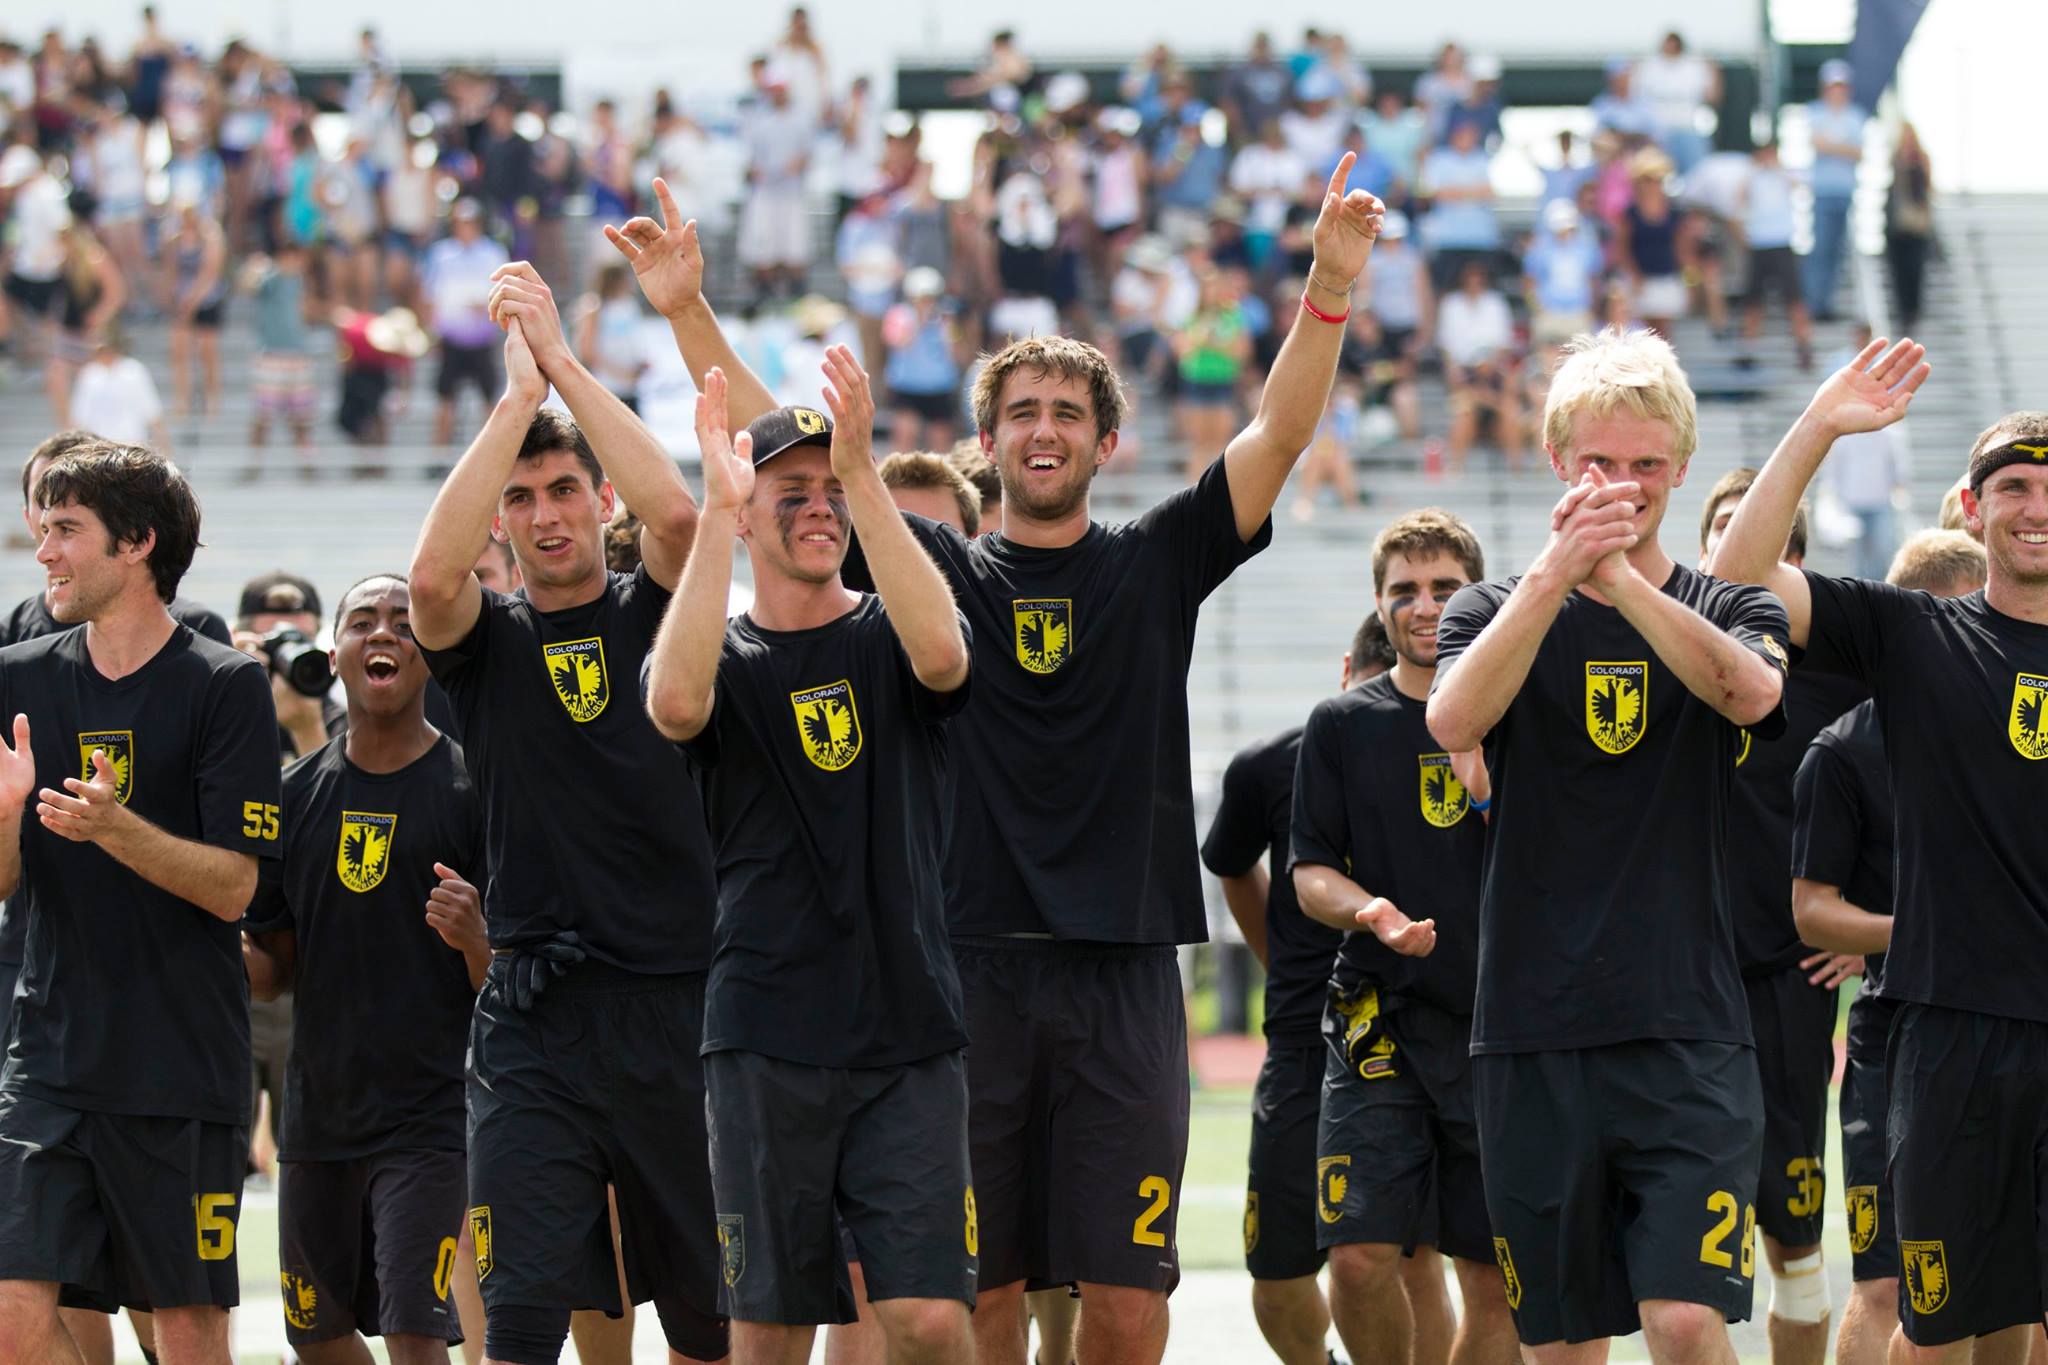 Colorado Mamabird celebrates winning their 2014 College Championship